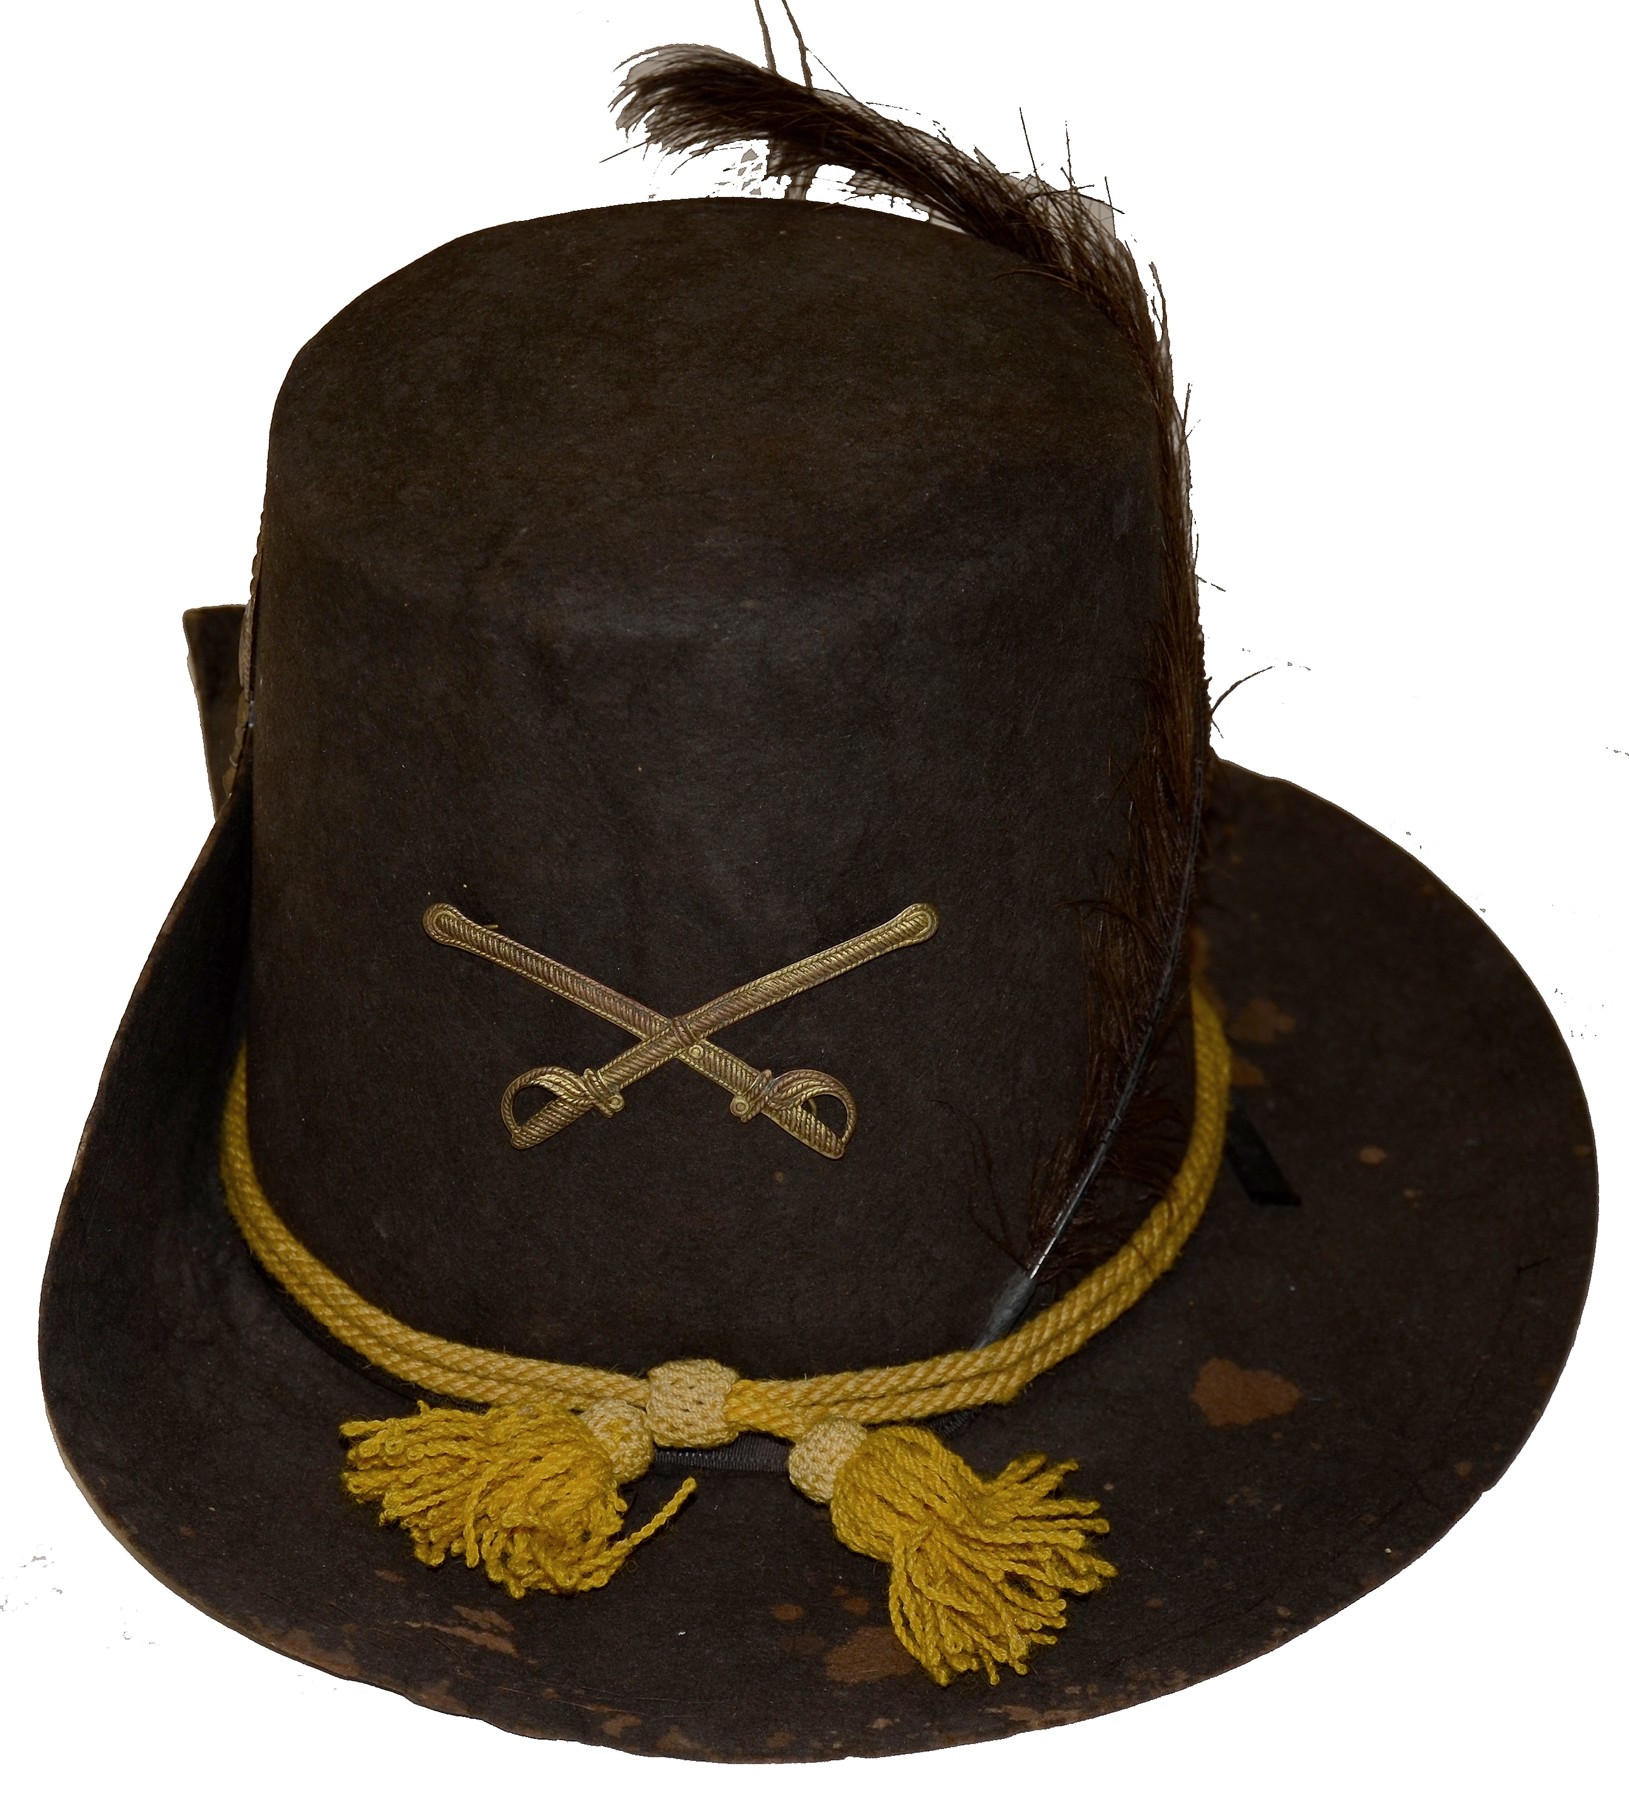 Civil War Soldiers Hats